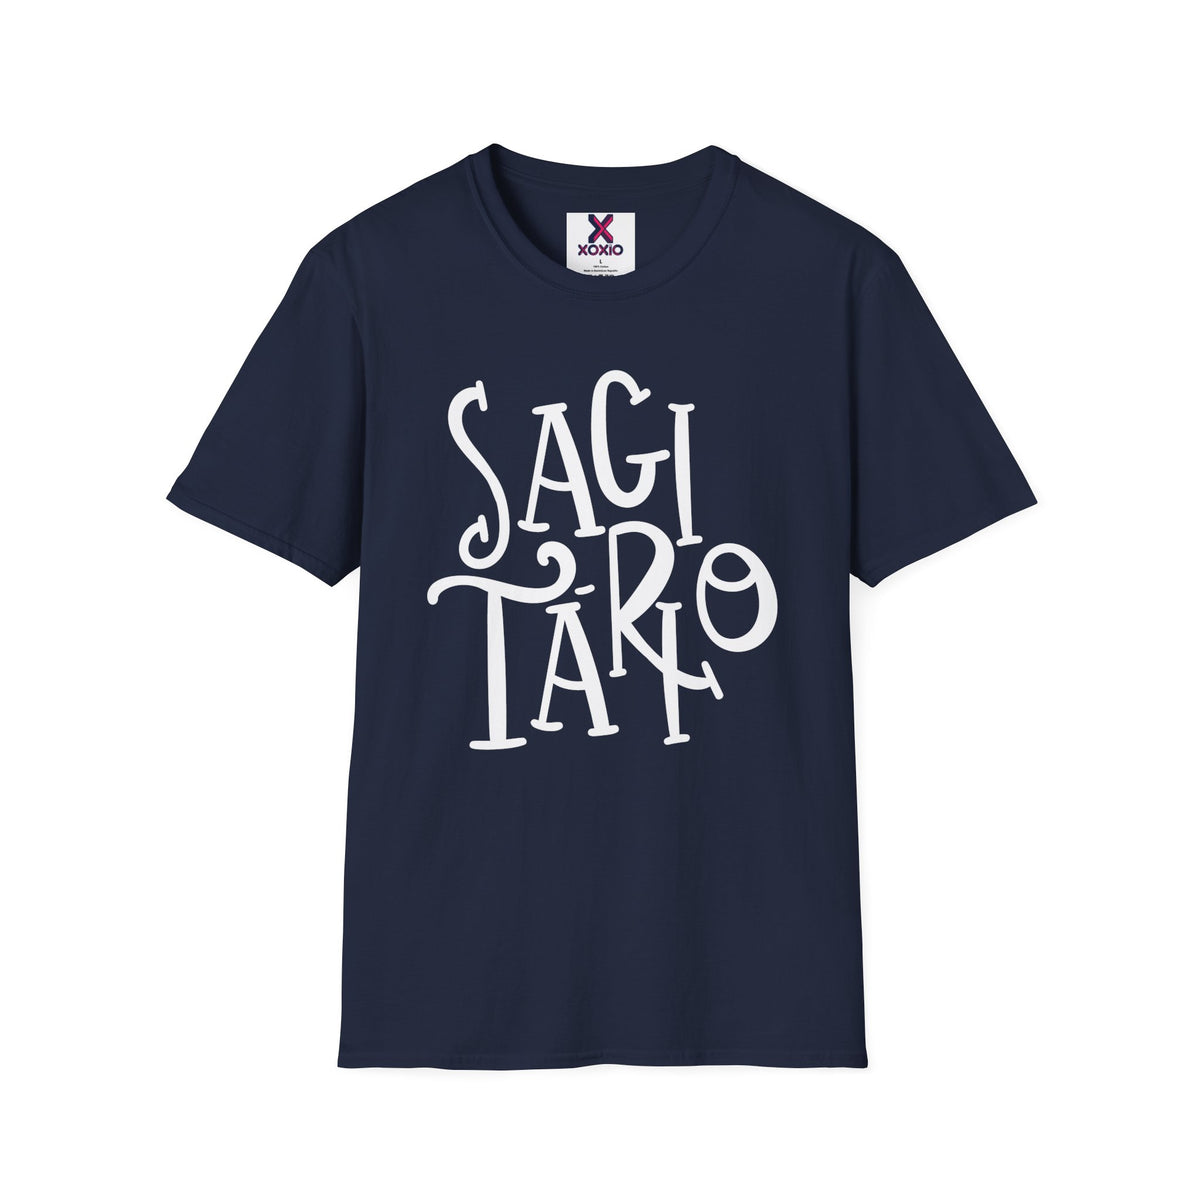 Sagittarius T-shirt / December Sagittarius T-shirt